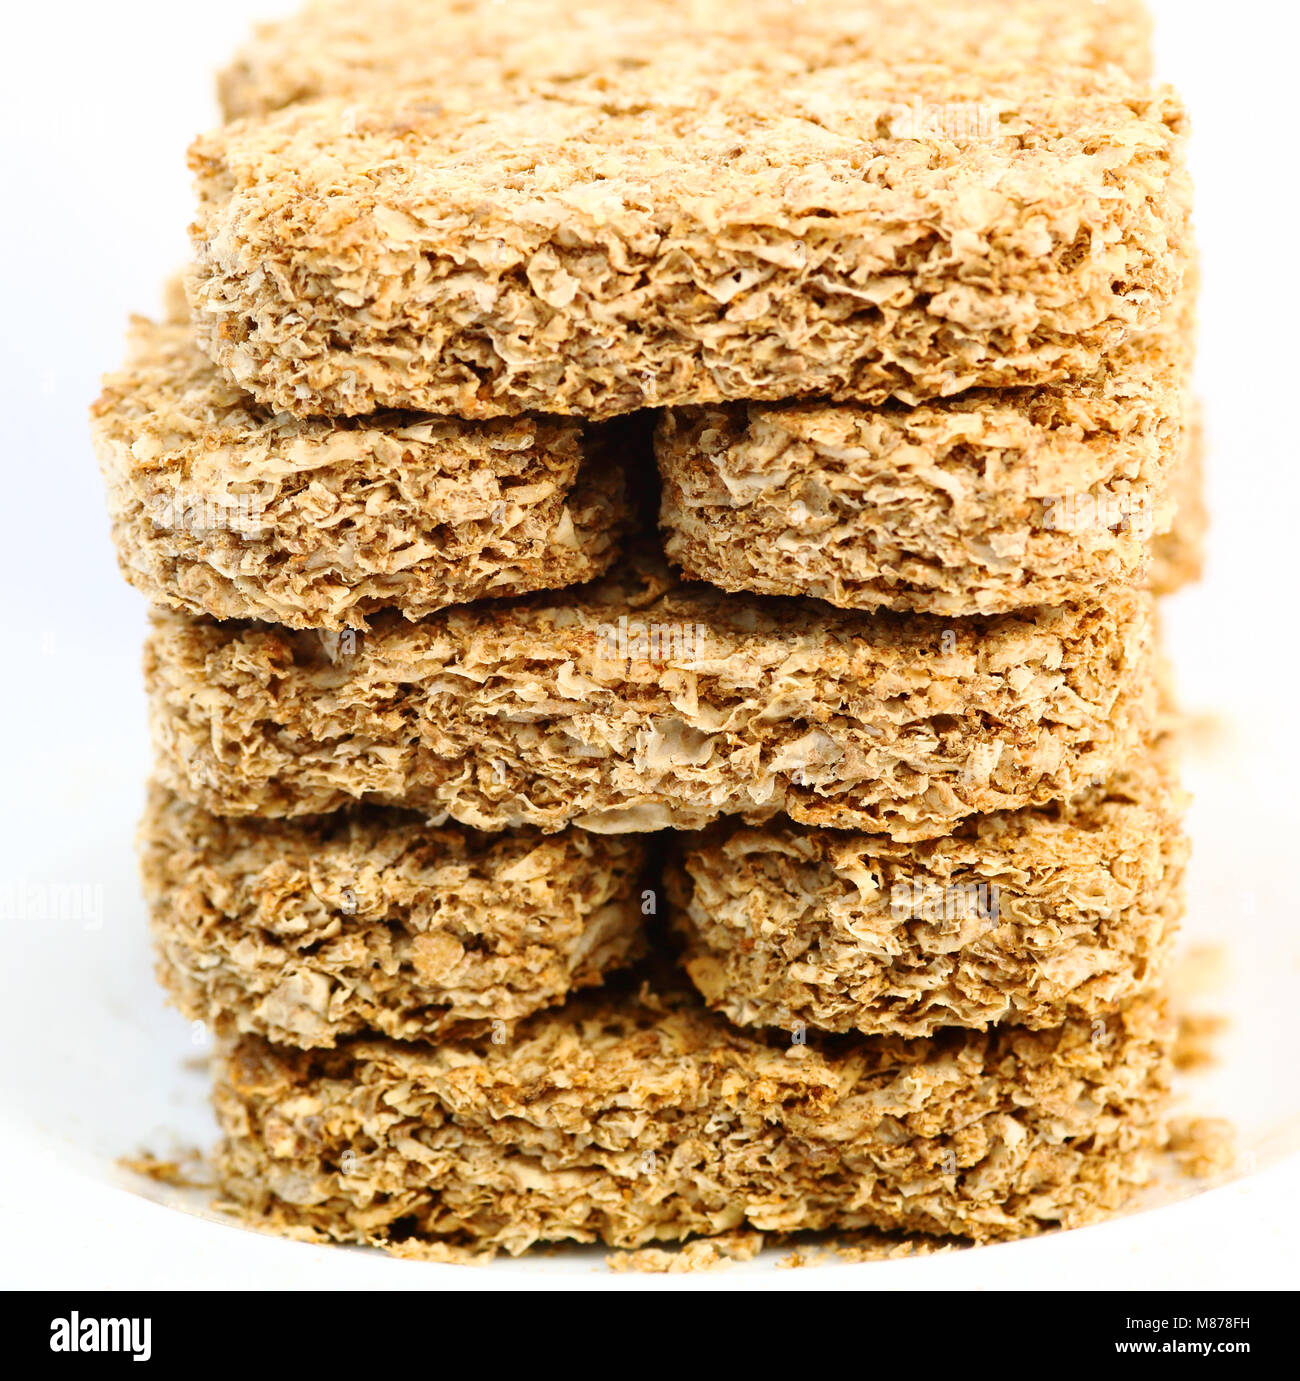 Weetabix breakfast cereal Stock Photo - Alamy